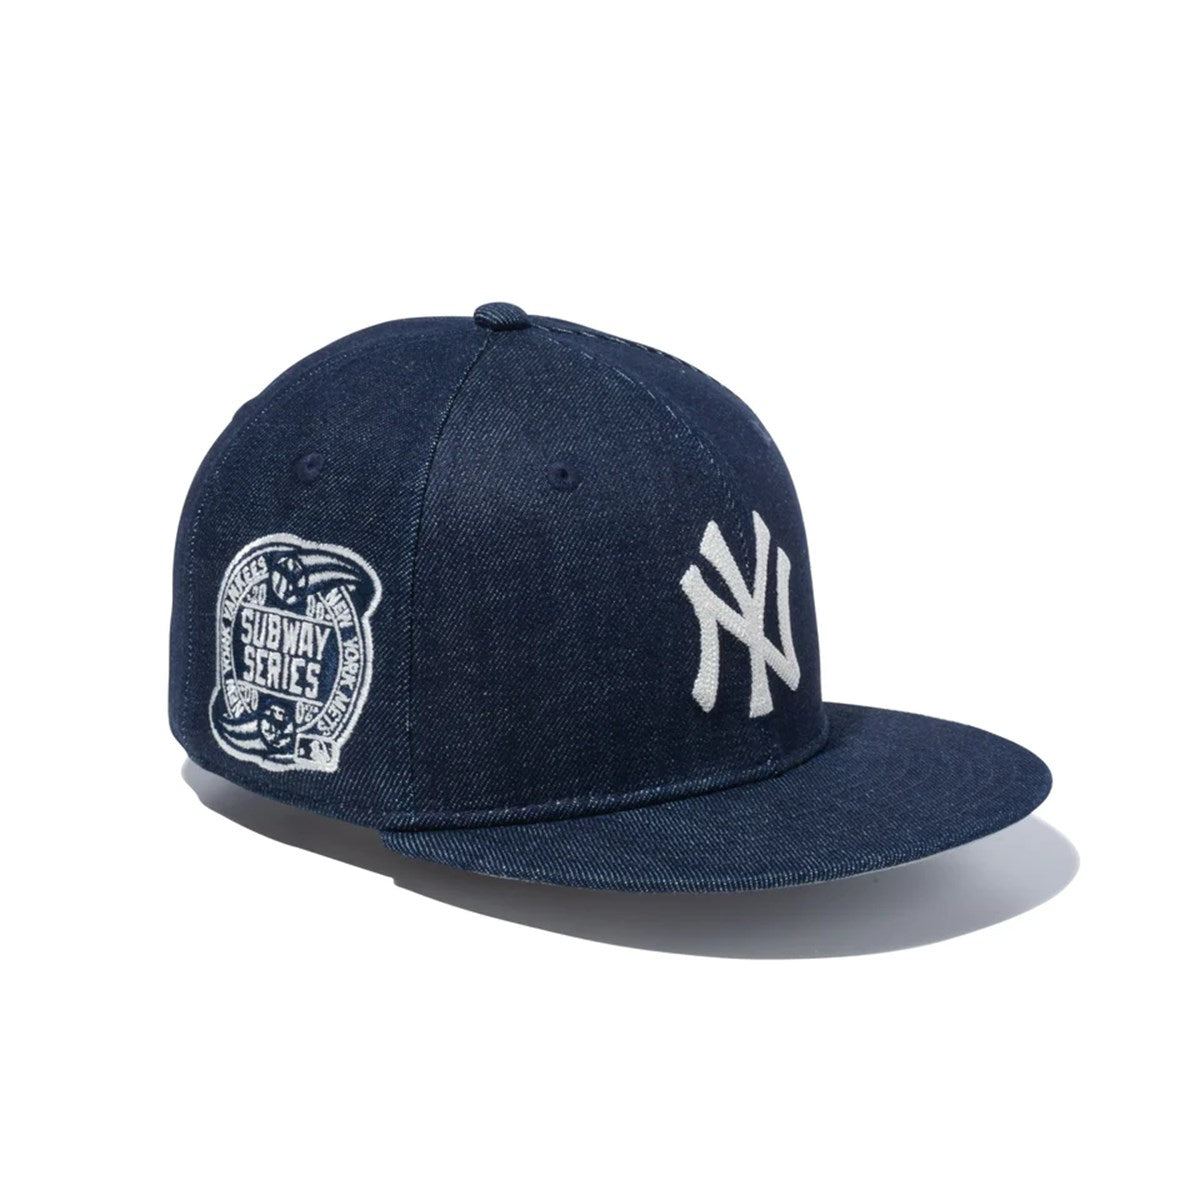 【KIDS】NEW ERA New York Yankees - YOUTH 9FIFTY SUBWAY INDDEN【14111883】